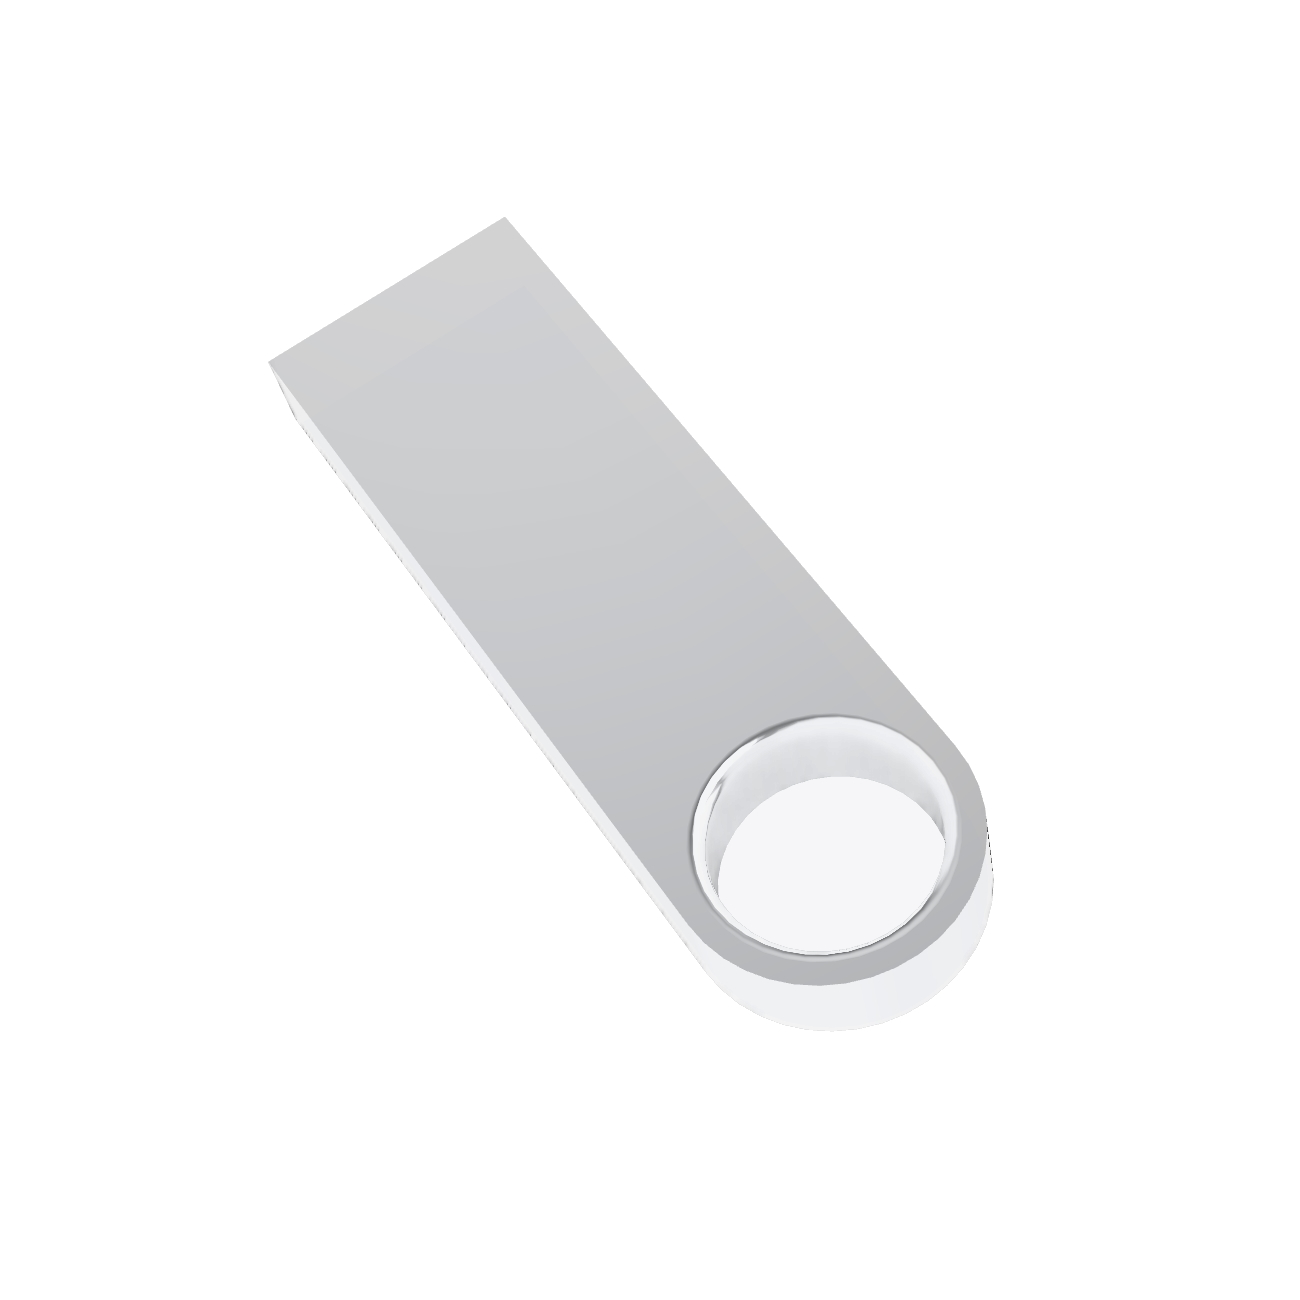 USB GERMANY GB) (Silber, USB-Stick 1 ® SE09